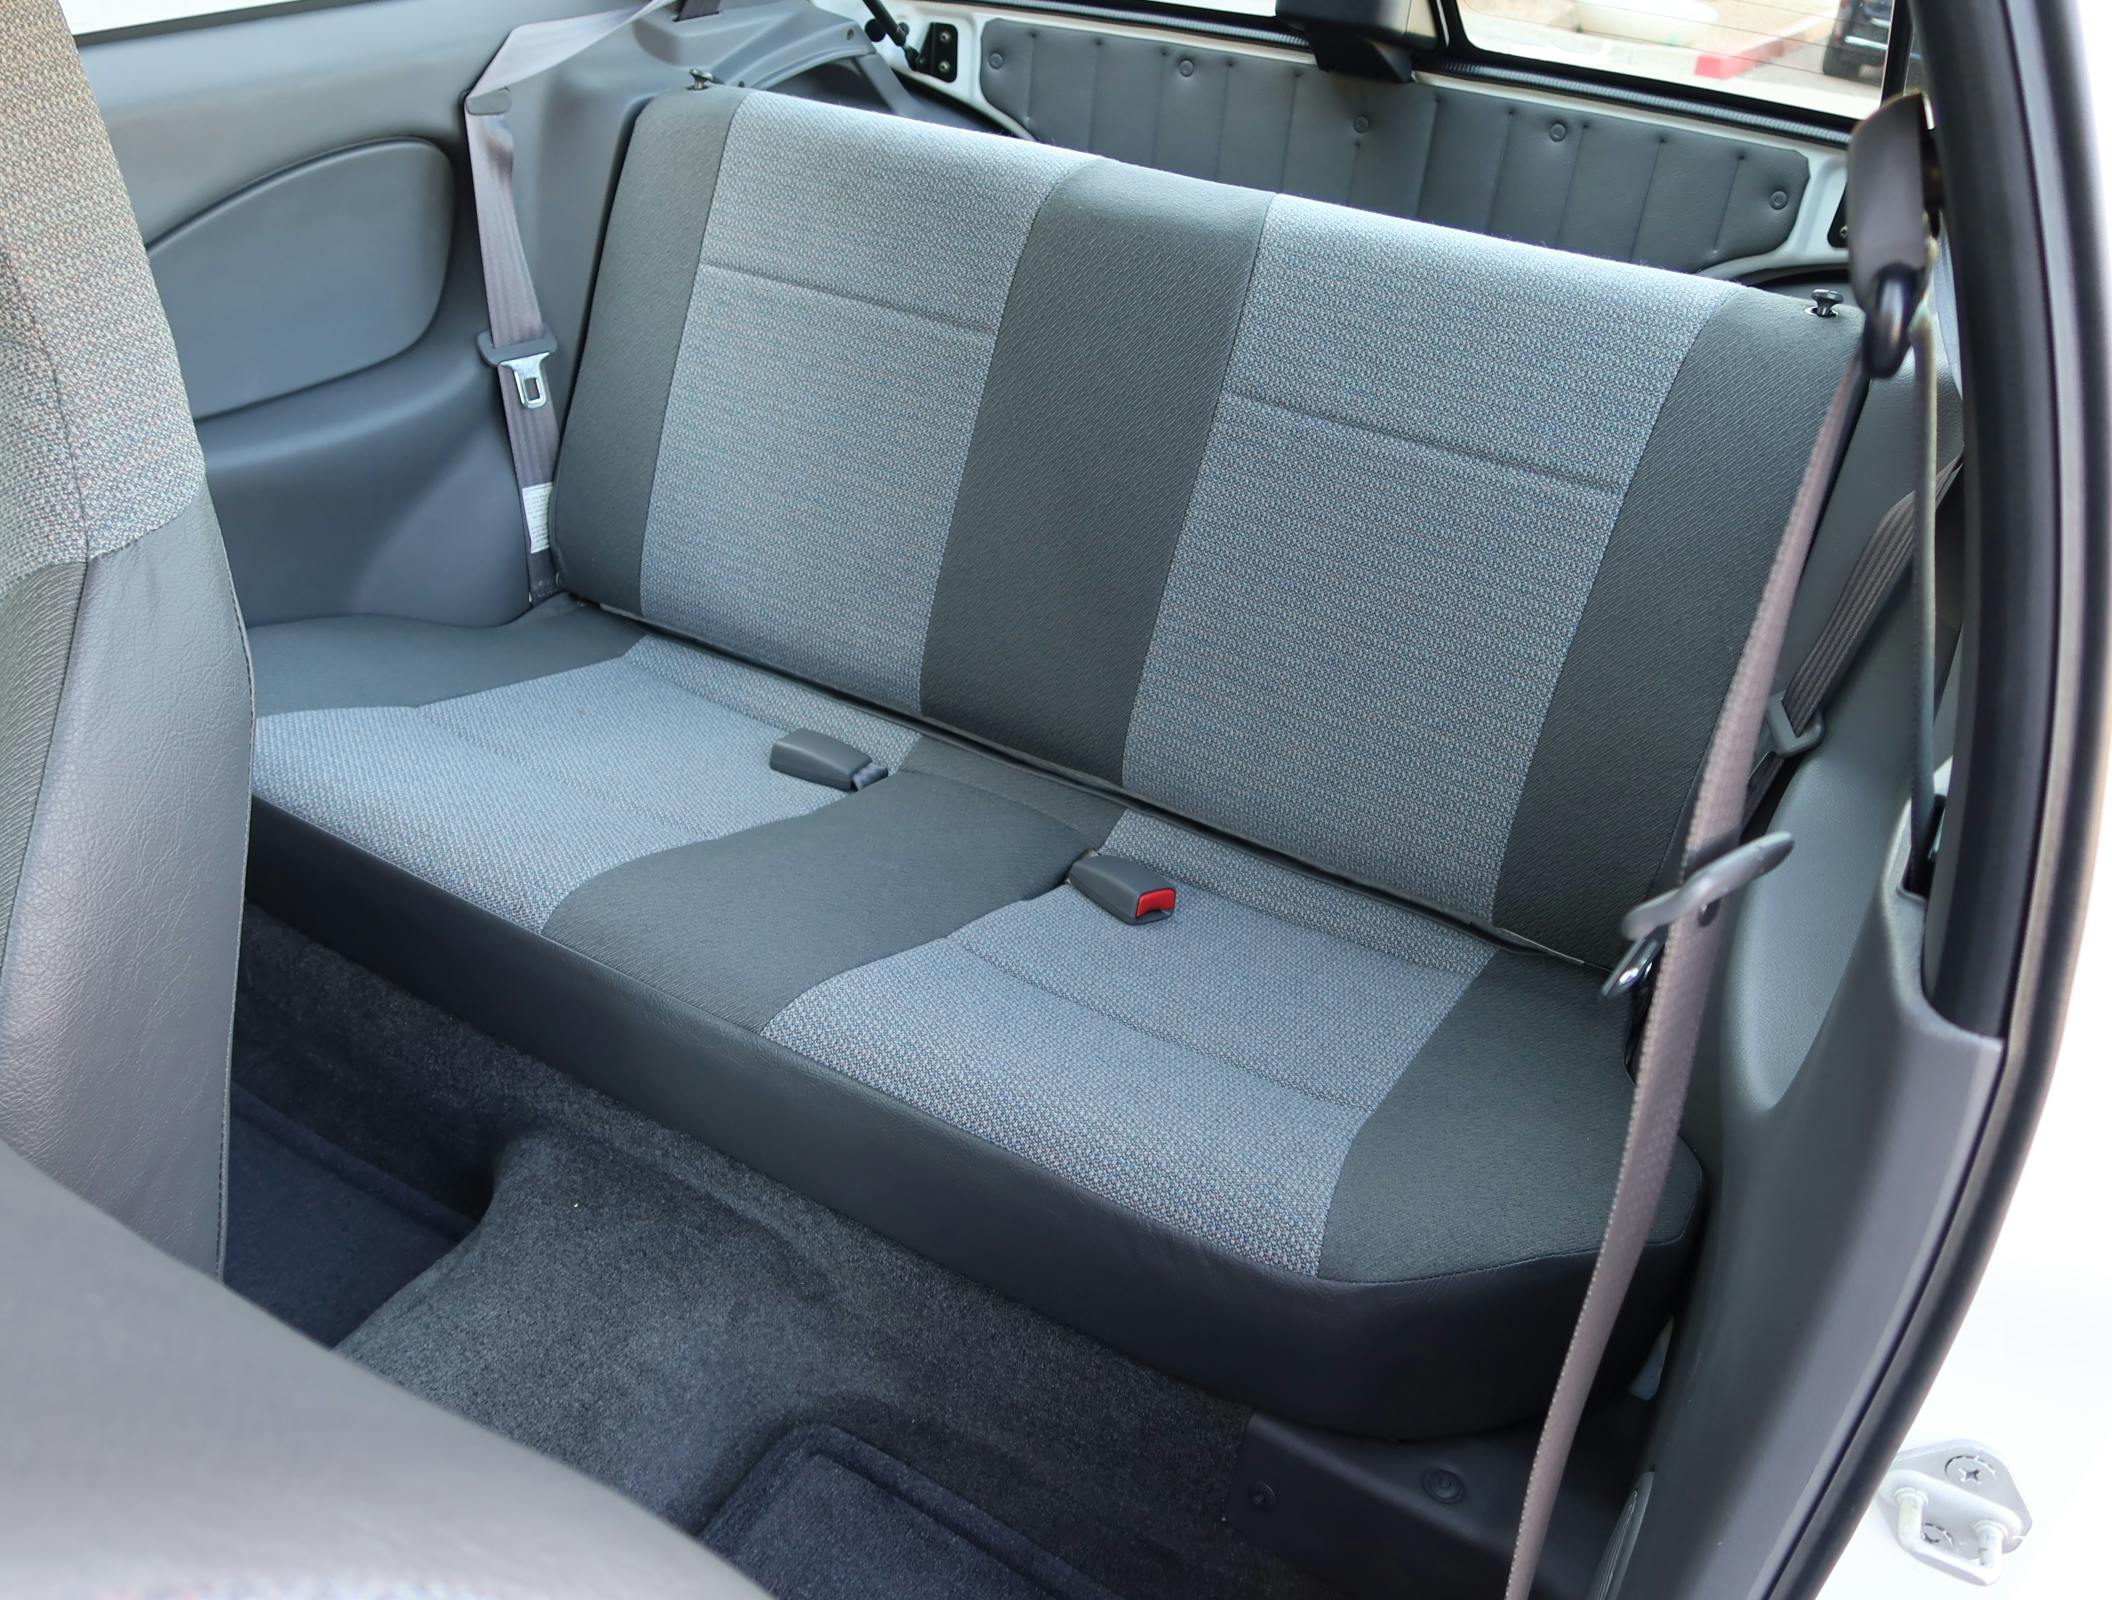 2000 Chevrolet Metro Coupe 5-Speed interior rear seat